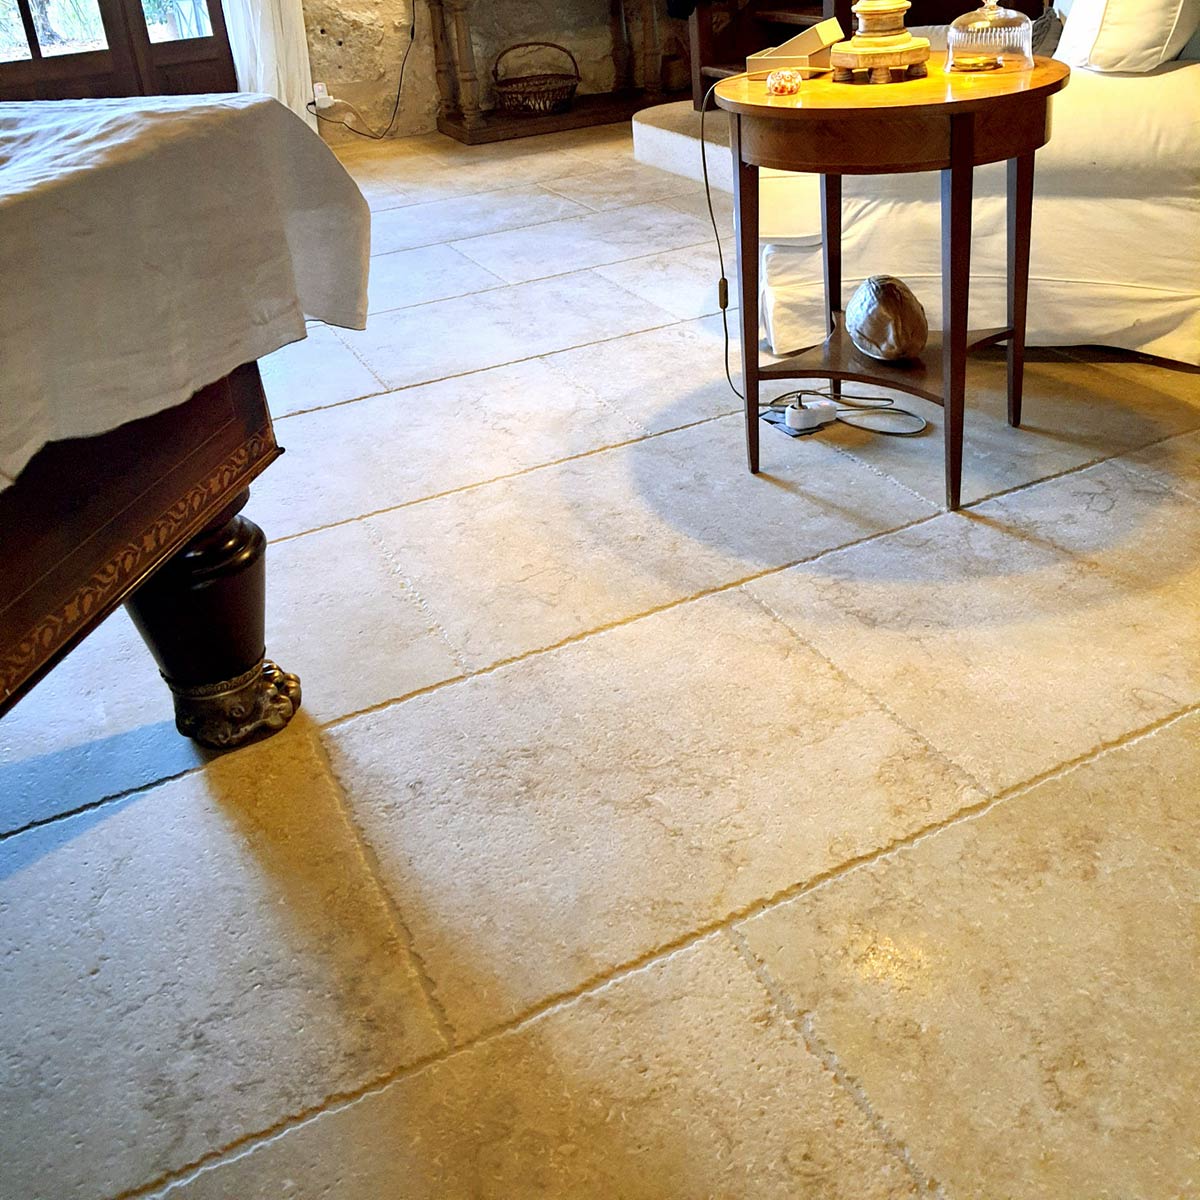 Interior flooring (living room) in natural stone